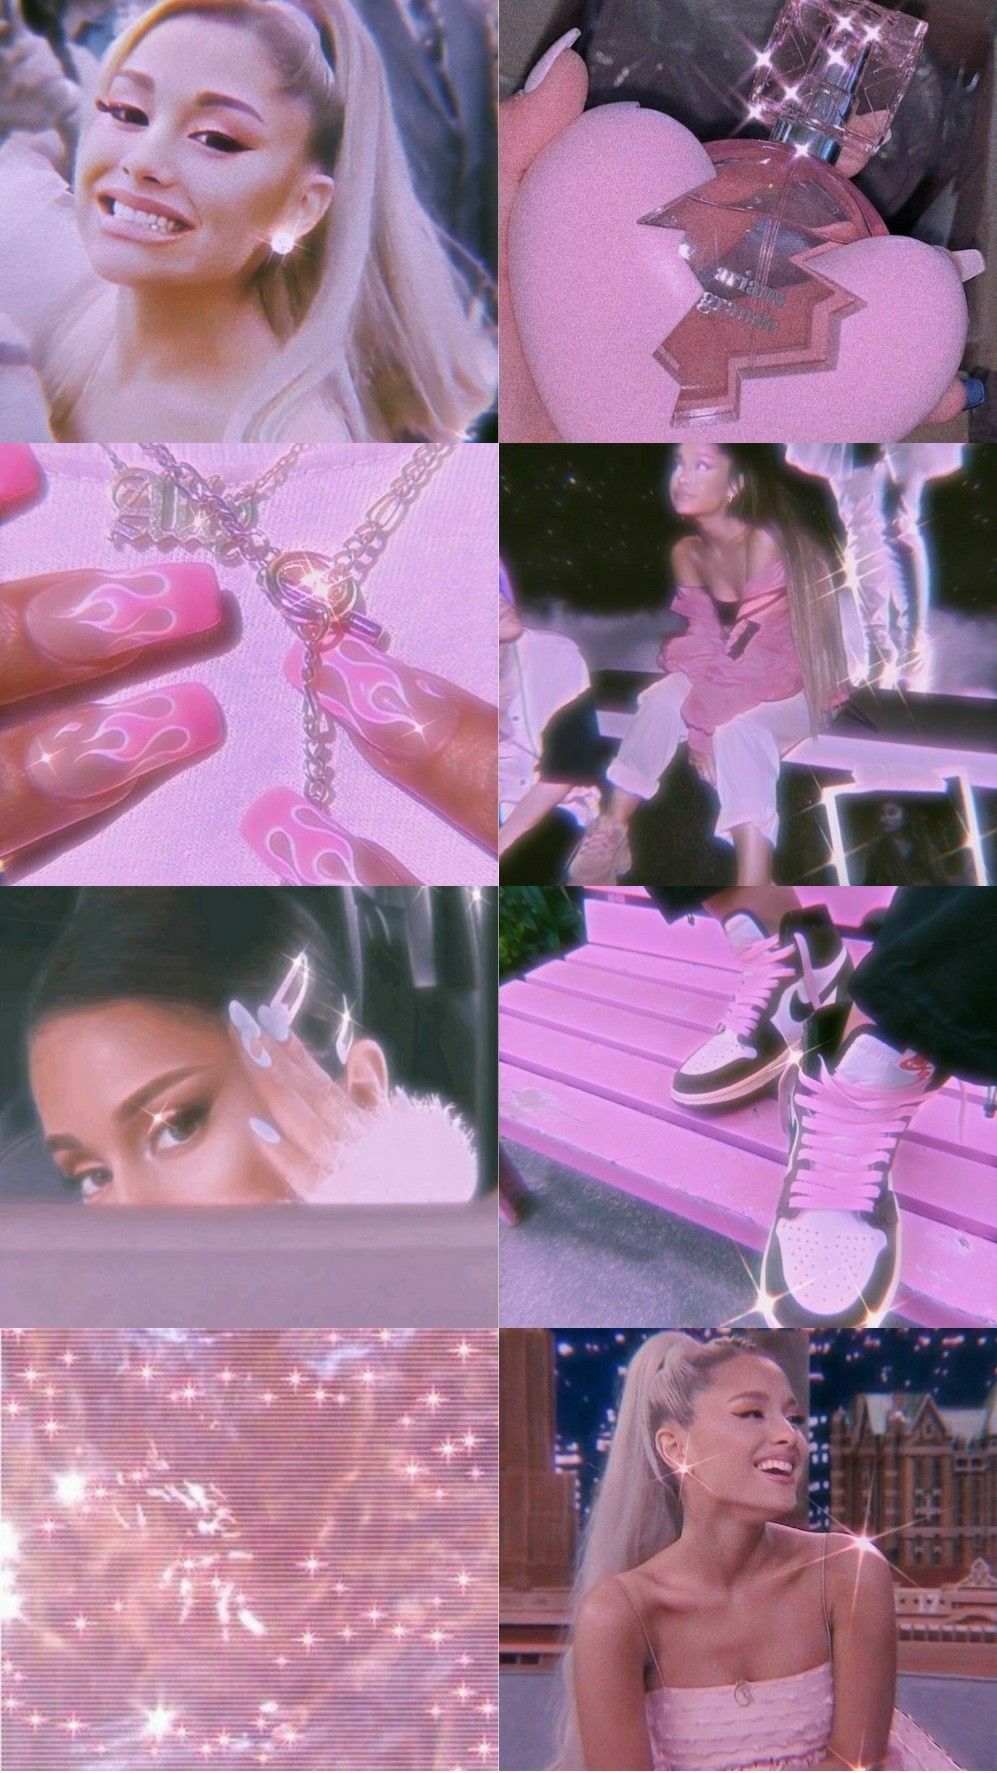 ariana pink aesthetic wallpaper. Ariana grande wallpaper, Ariana grande background, Ariana grande baby